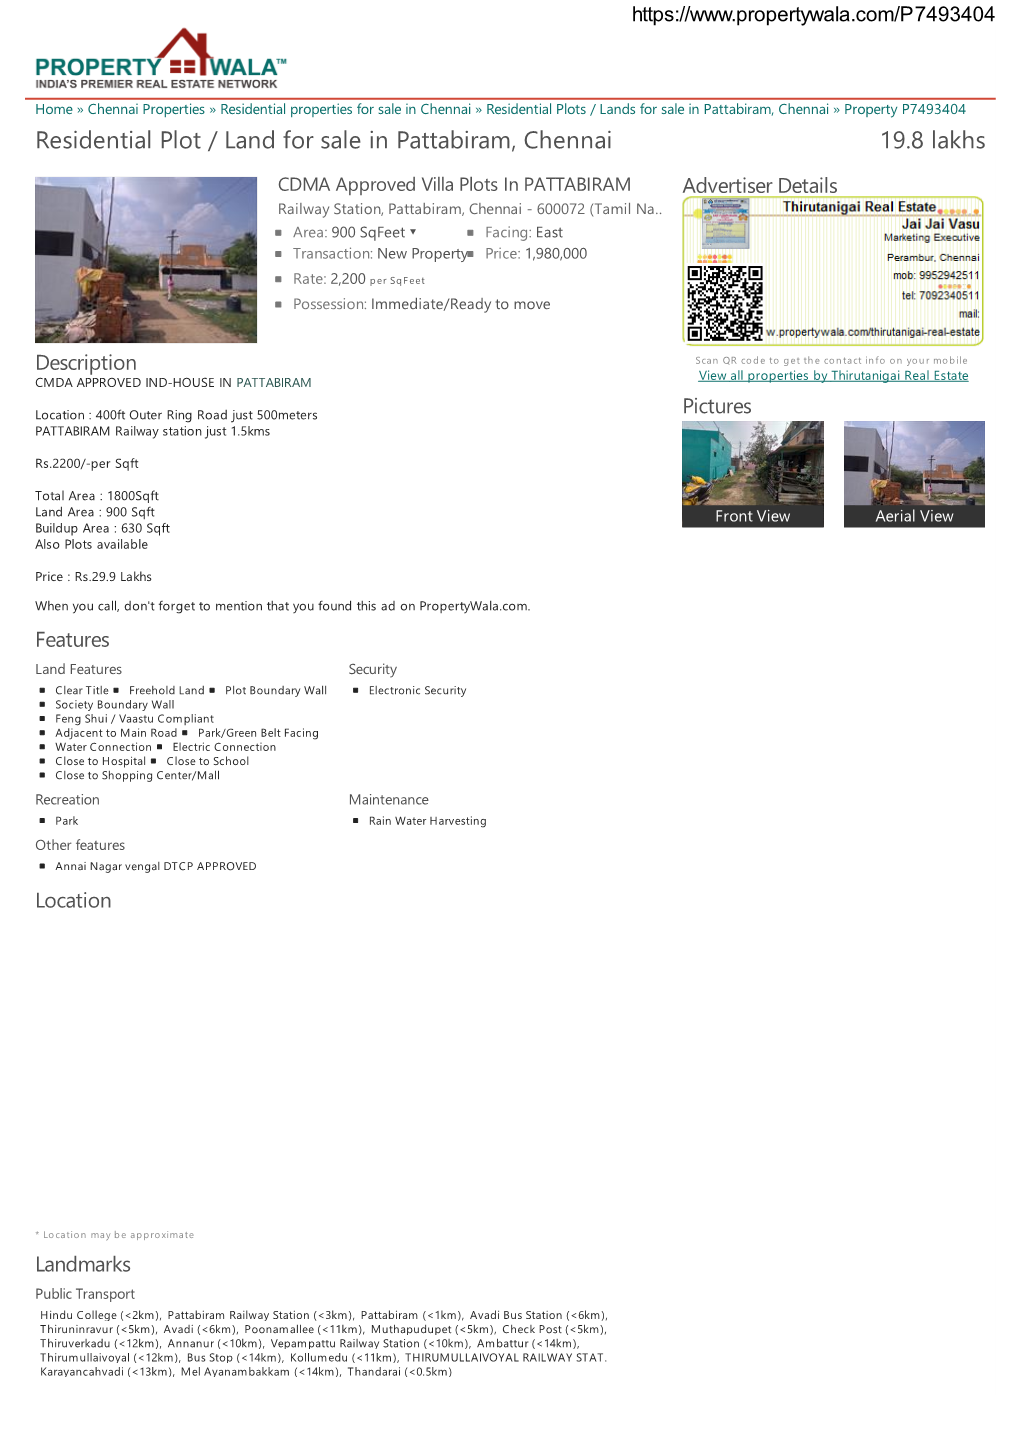 Residential Plot / Land for Sale in Pattabiram, Chennai (P7493404